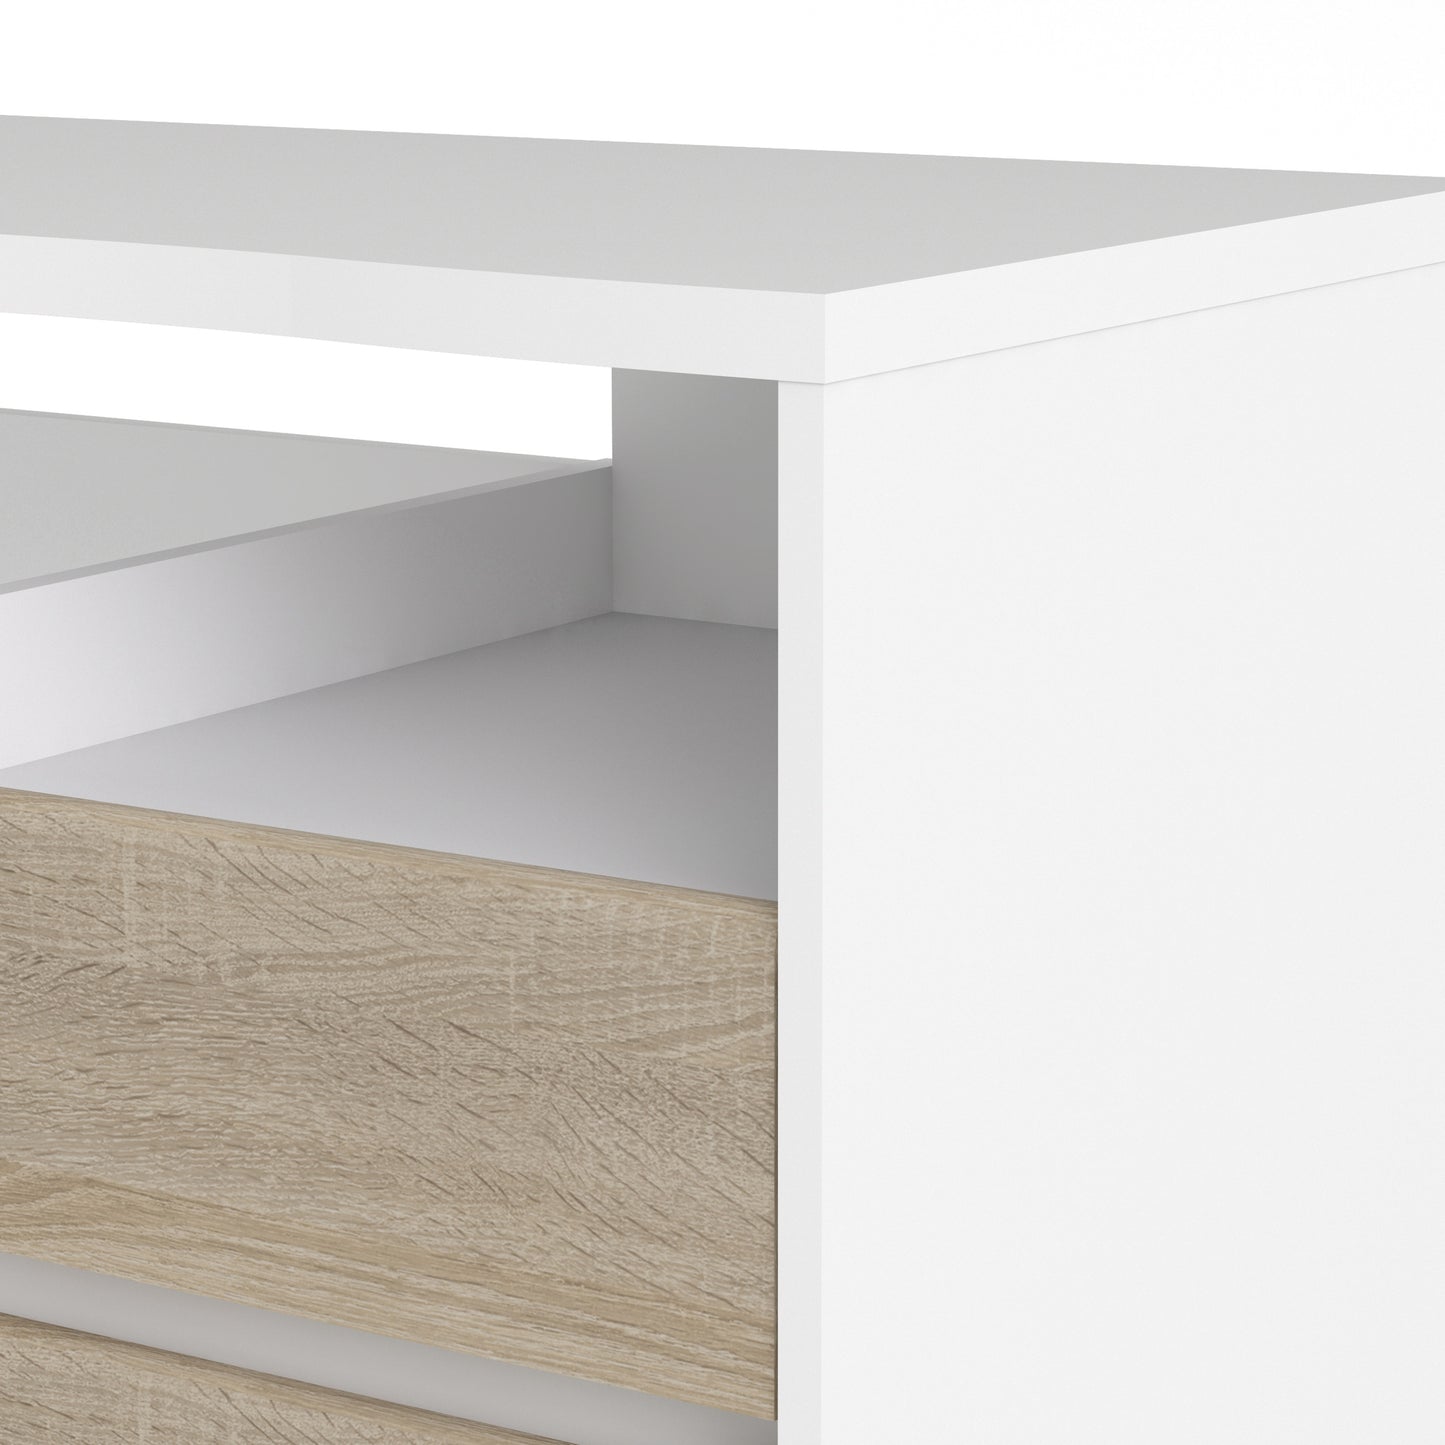 Function Plus  Desk 3 drawers White Oak structure